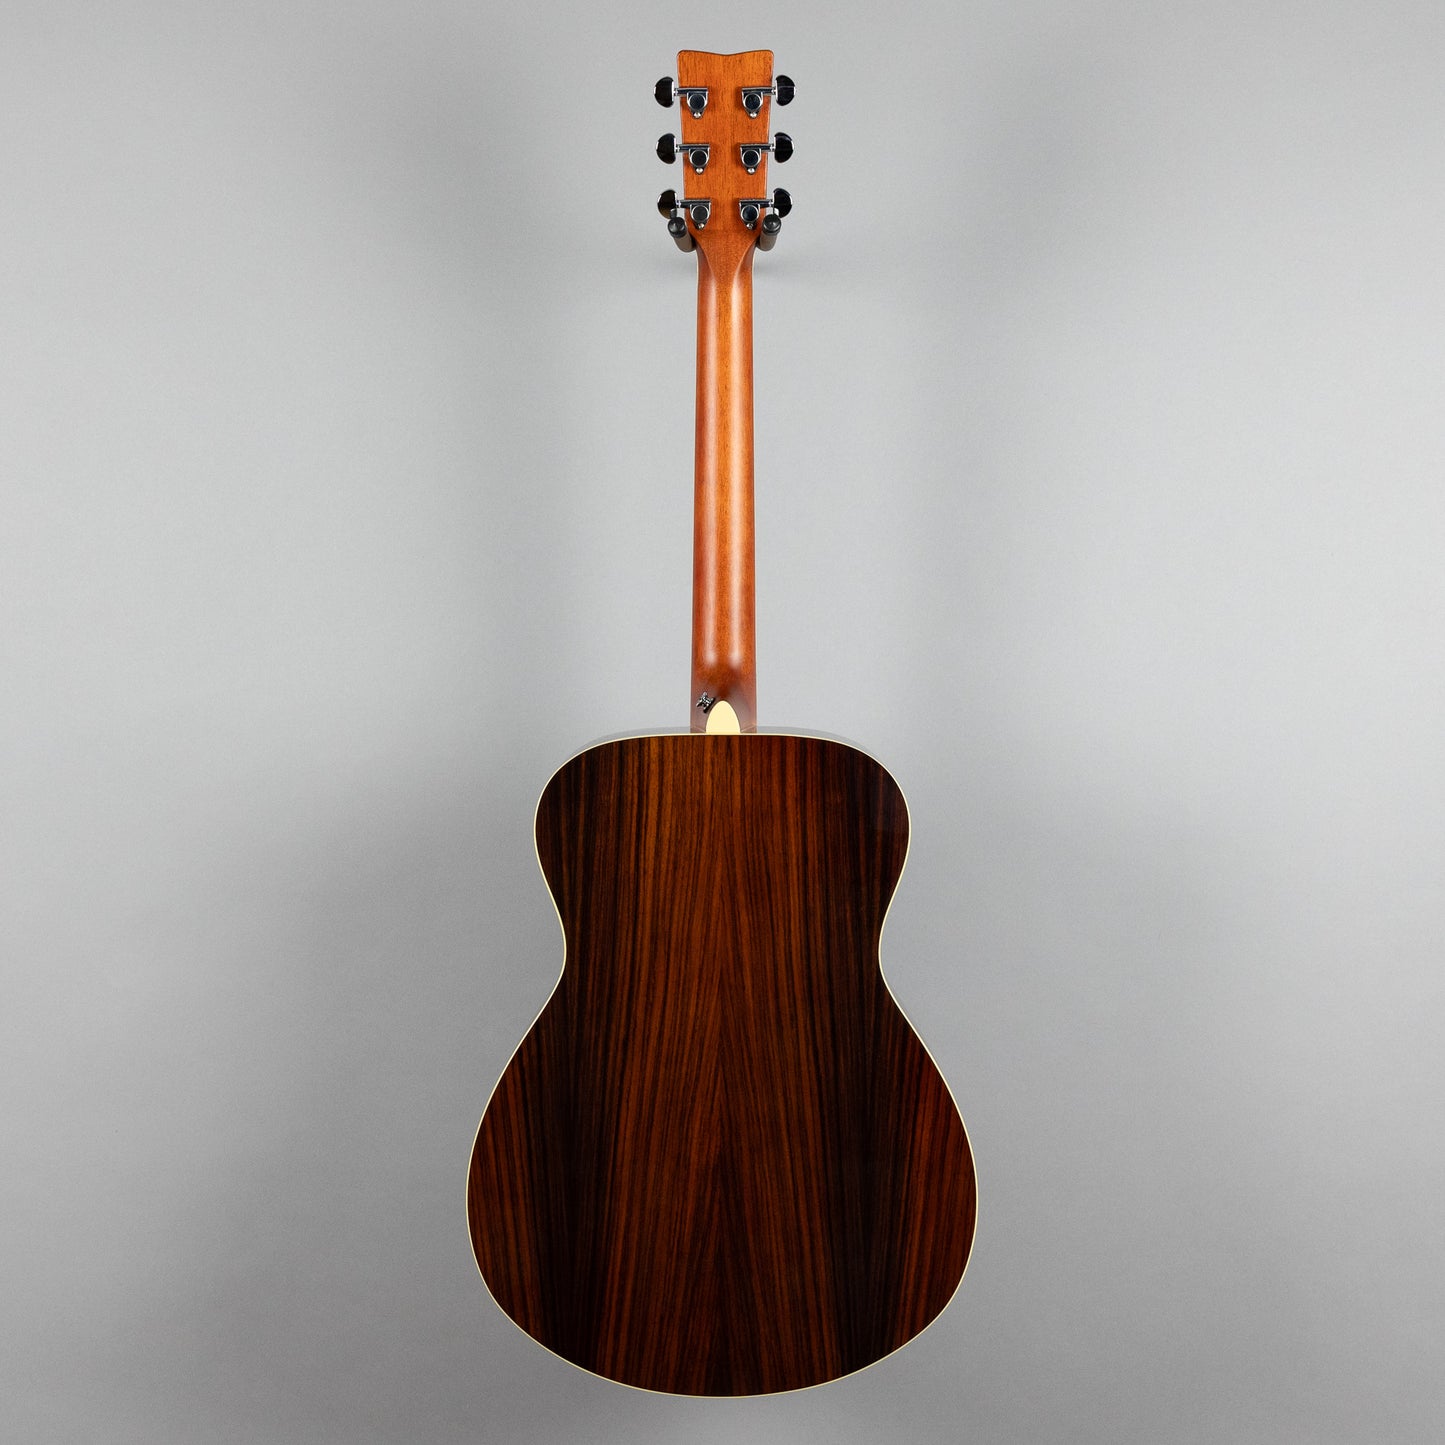 Yamaha FS830 Acoustic Guitar in Dusk Sun Red